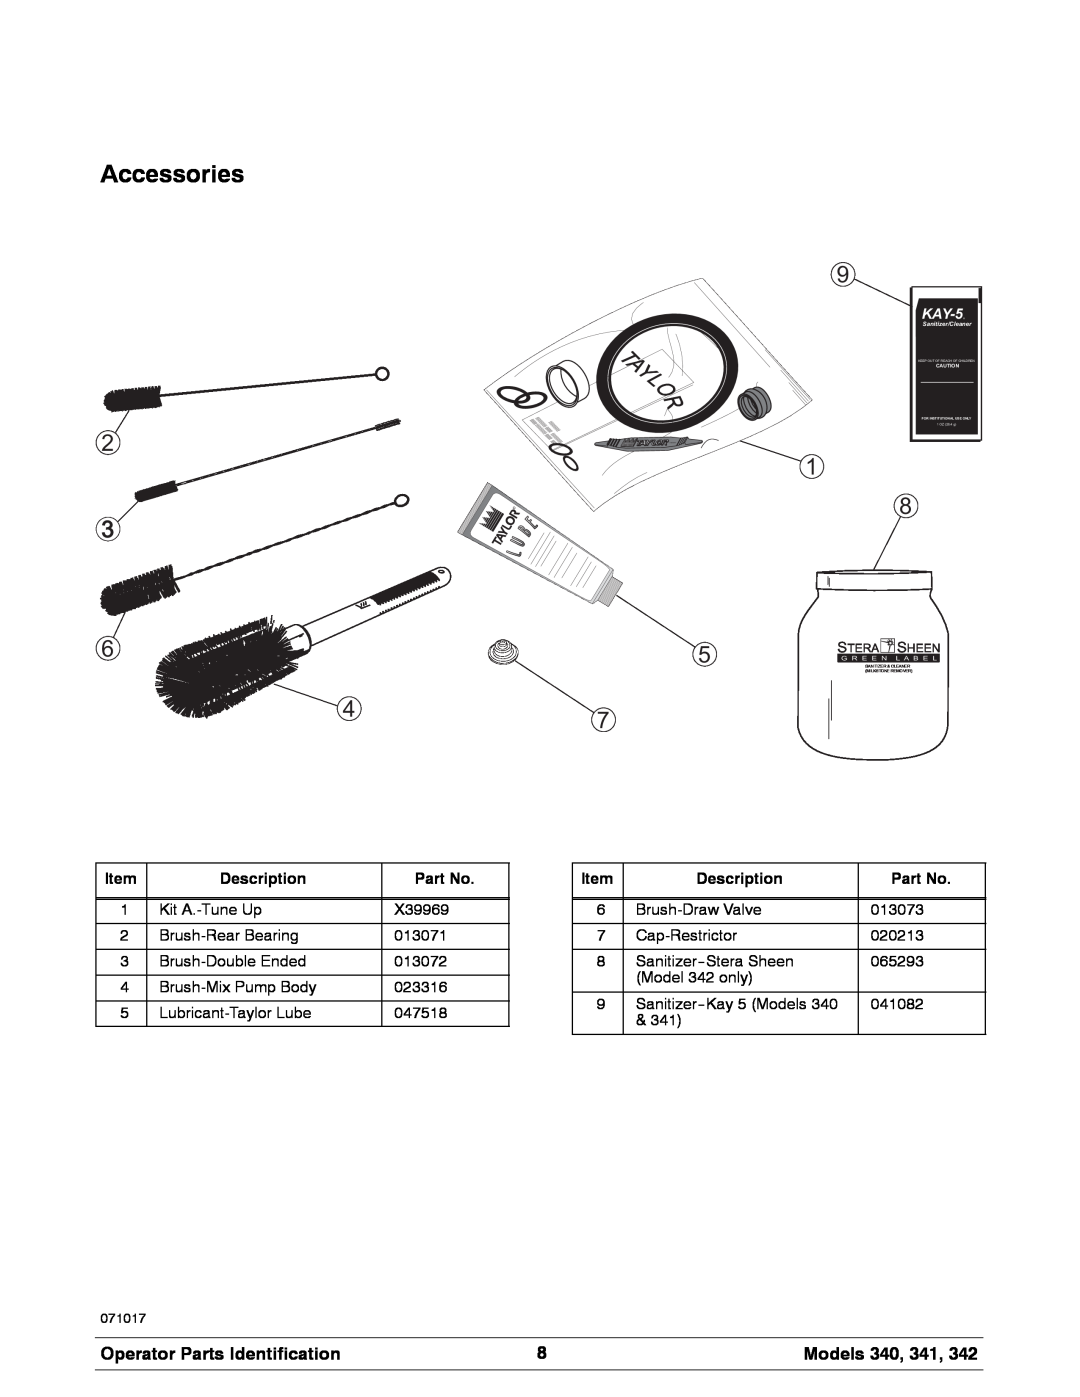 Taylor 342 manual Accessories, Operator Parts Identification, Models 340, 341, Description 